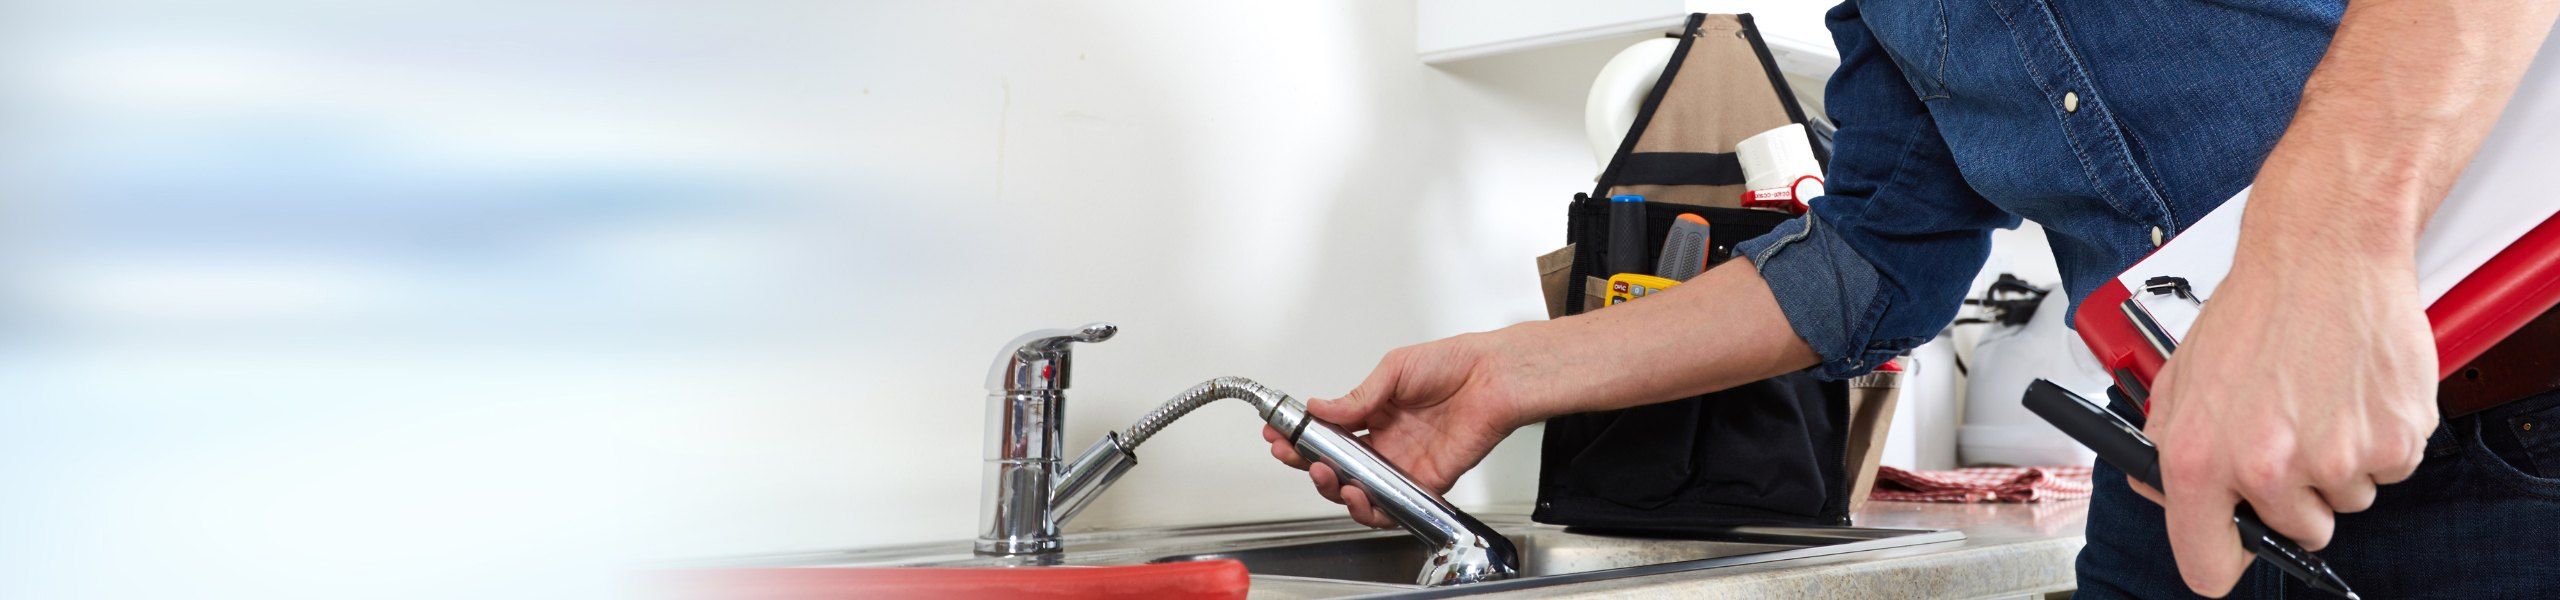 Plumber fixing tap in kitchen John G. Plumbing Gas and Plumbing Tips and News